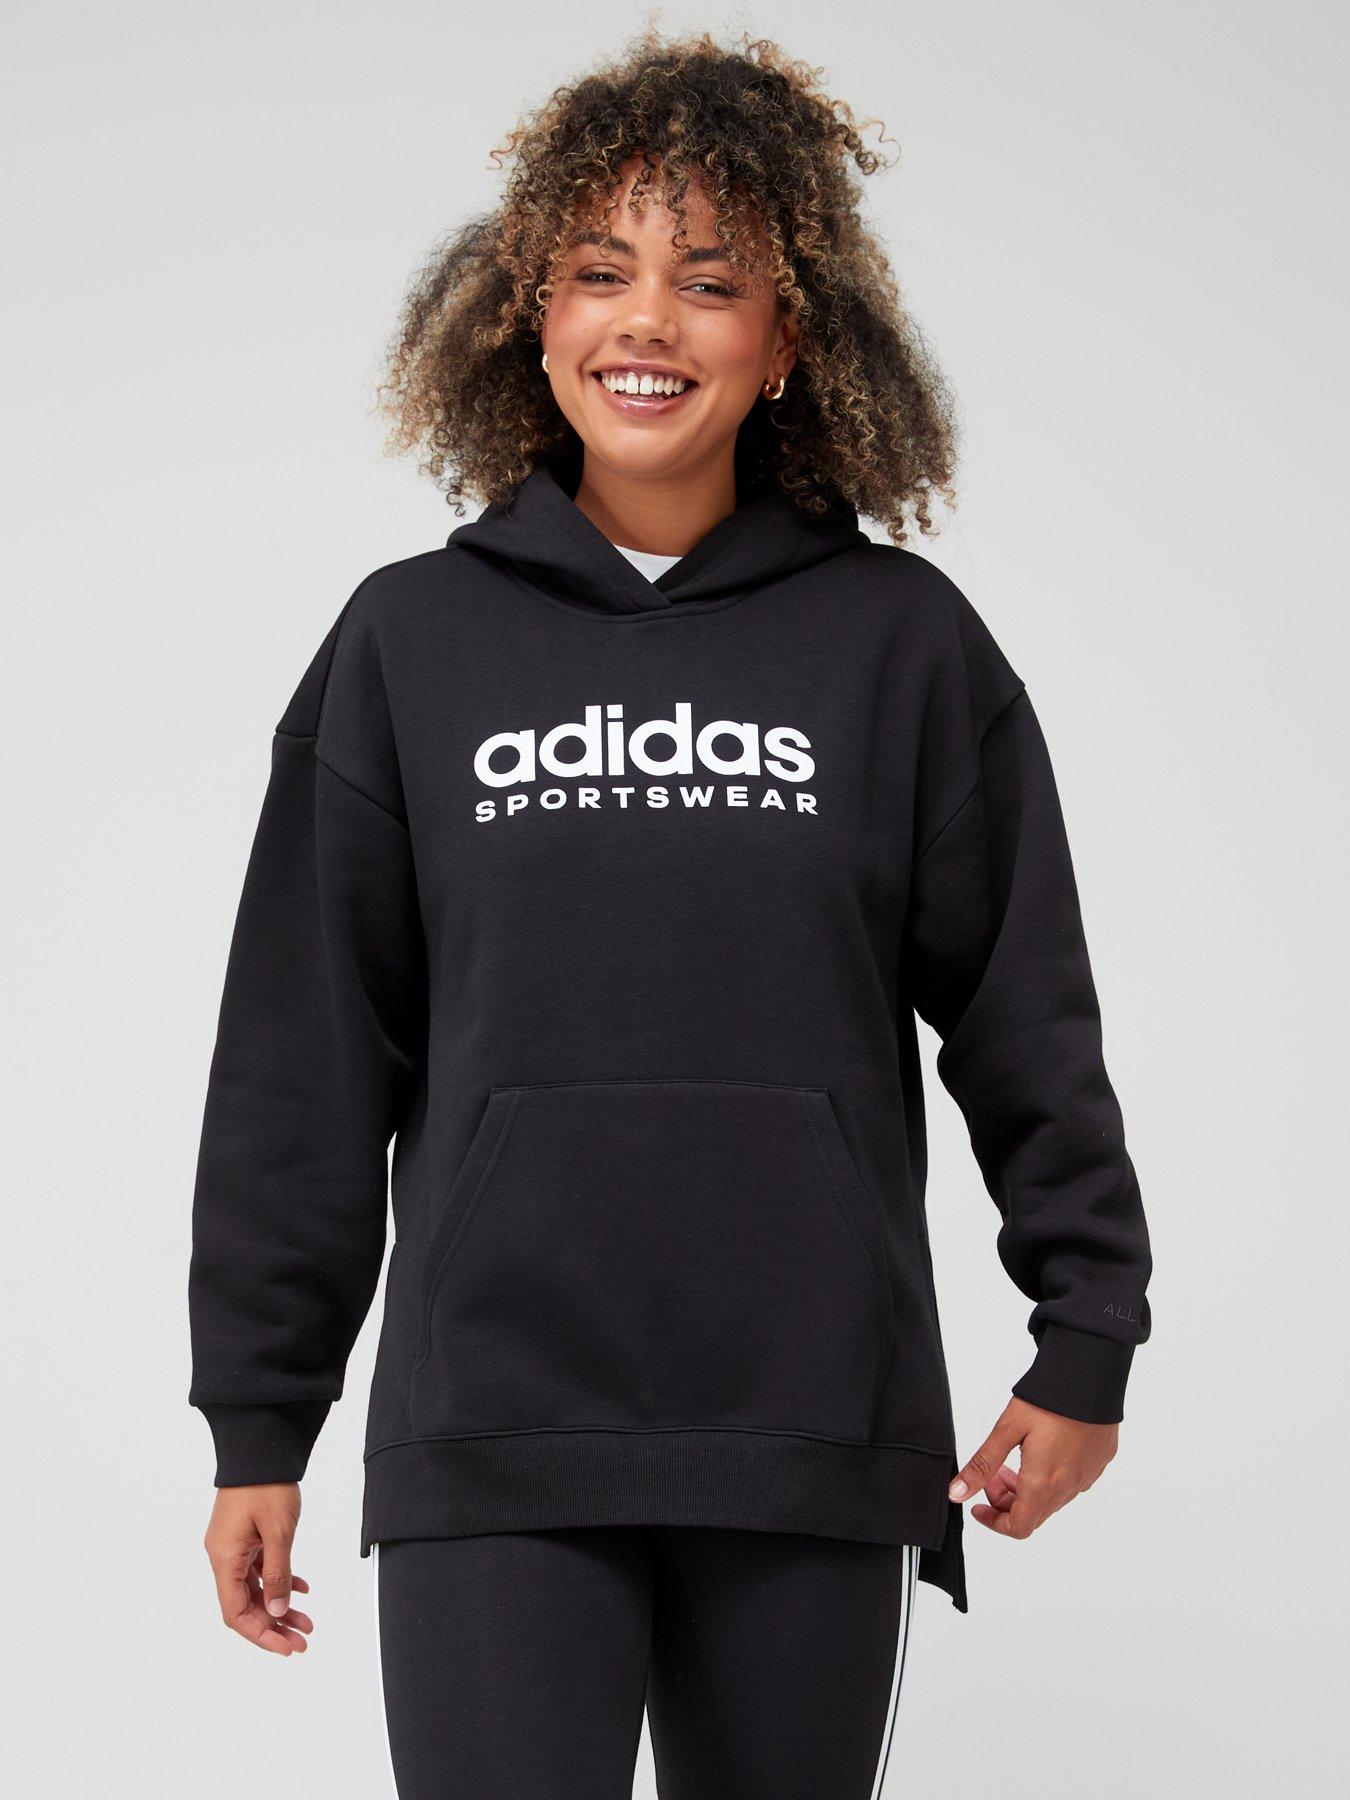 Black | Adidas sweatshirts clothing Sports | Very Hoodies | Ireland | leisure & sports Womens & 